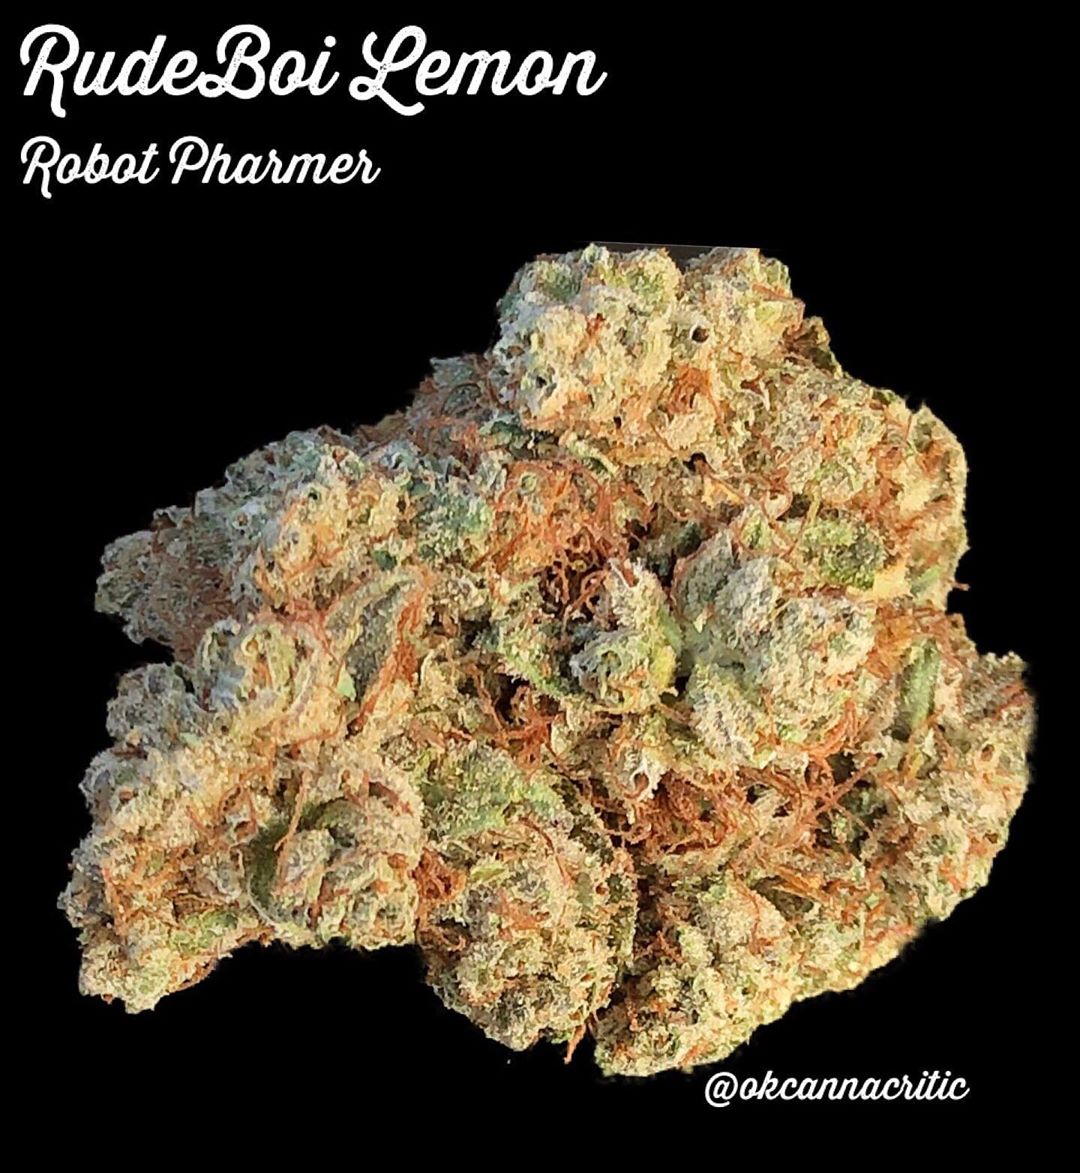 Rudeboi Lemon By Robot Pharmer Strain Review By Okcannacritic 